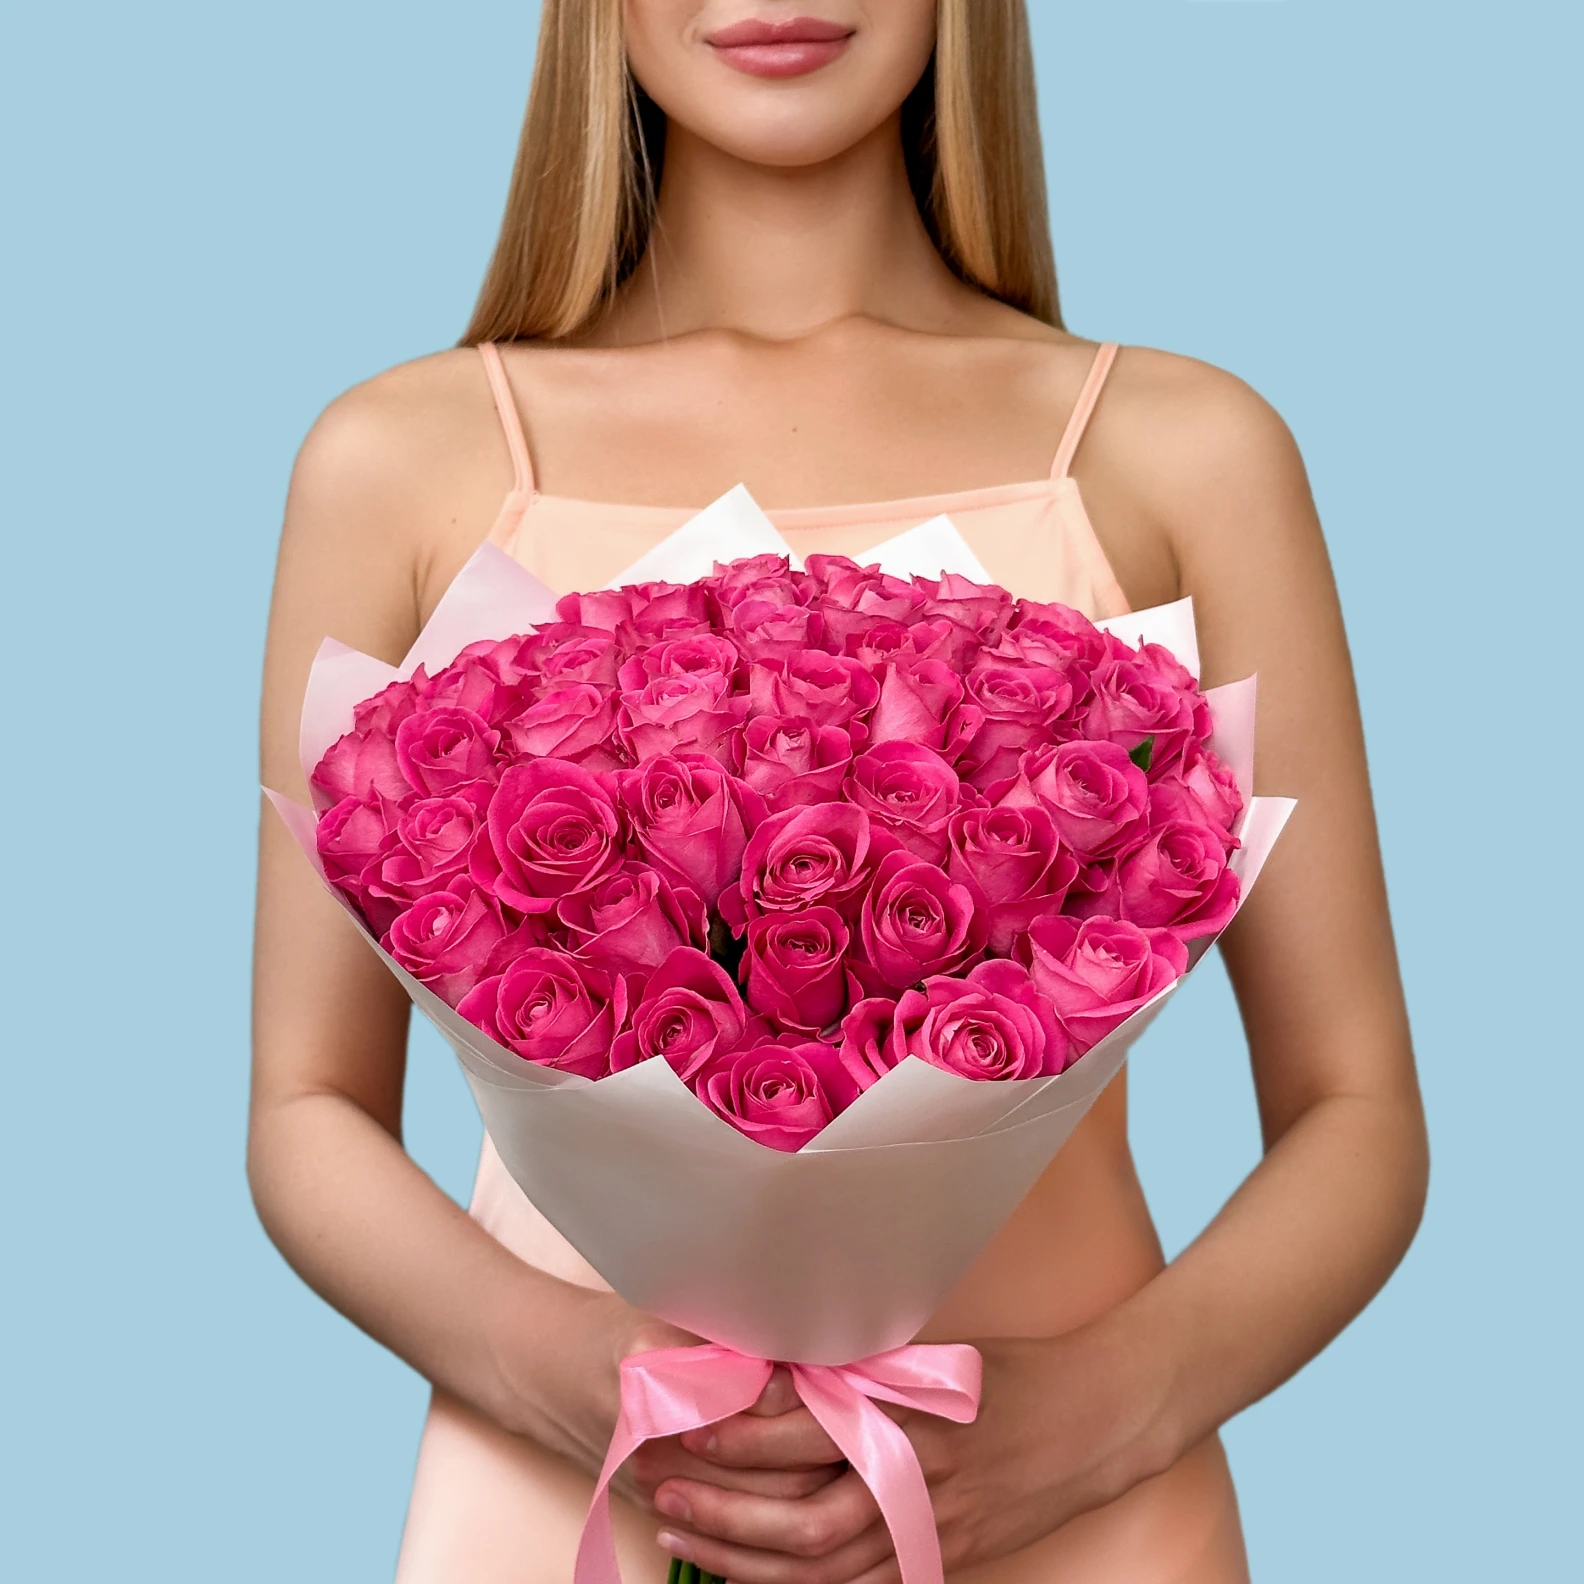 50 Pink Roses from Kenya - image №1